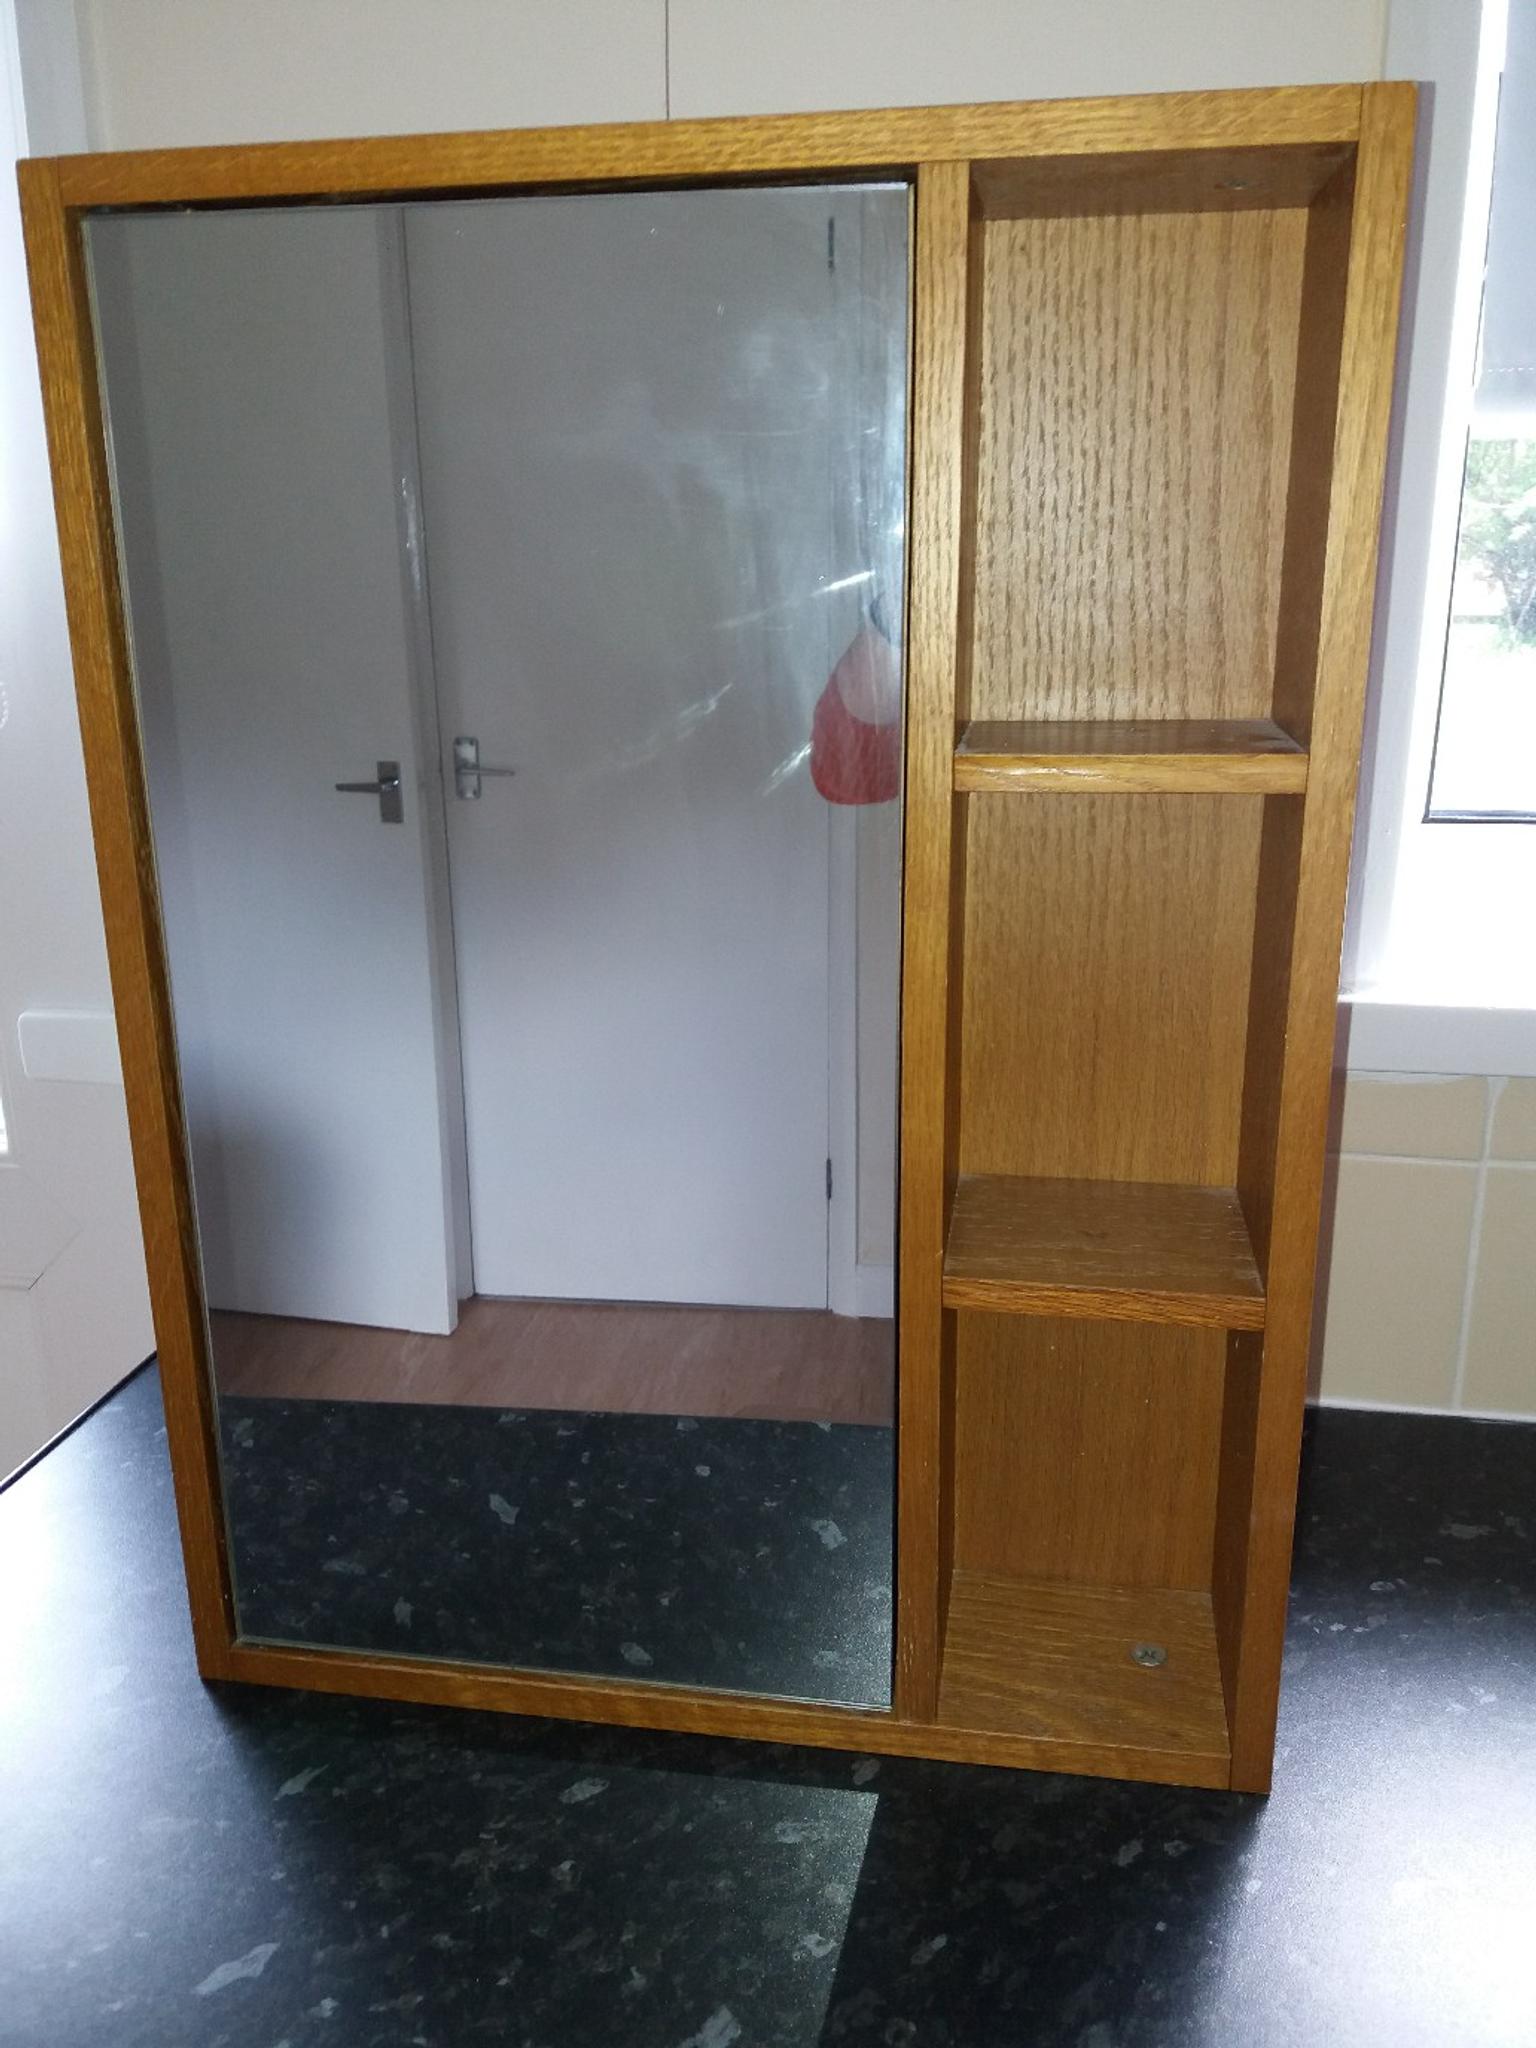 Next Wooden Mirrored Bathroom Cabinet In S20 Rotherham Fur 5 00